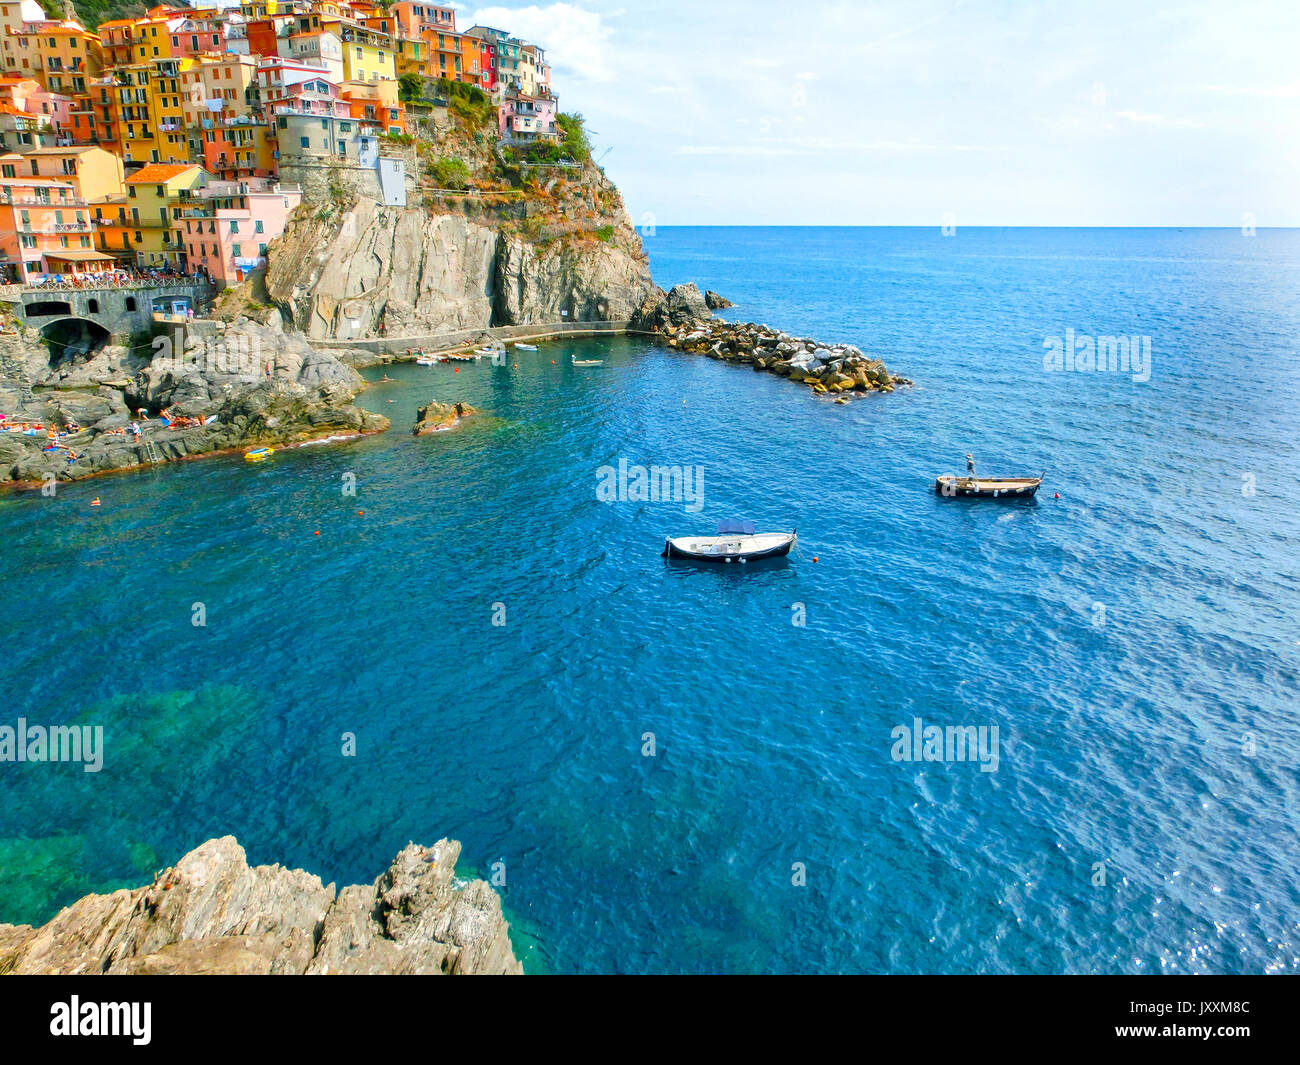 Colorful traditional houses on a rock over Mediterranean sea, Manarola, Cinque Terre, Italy Stock Photo